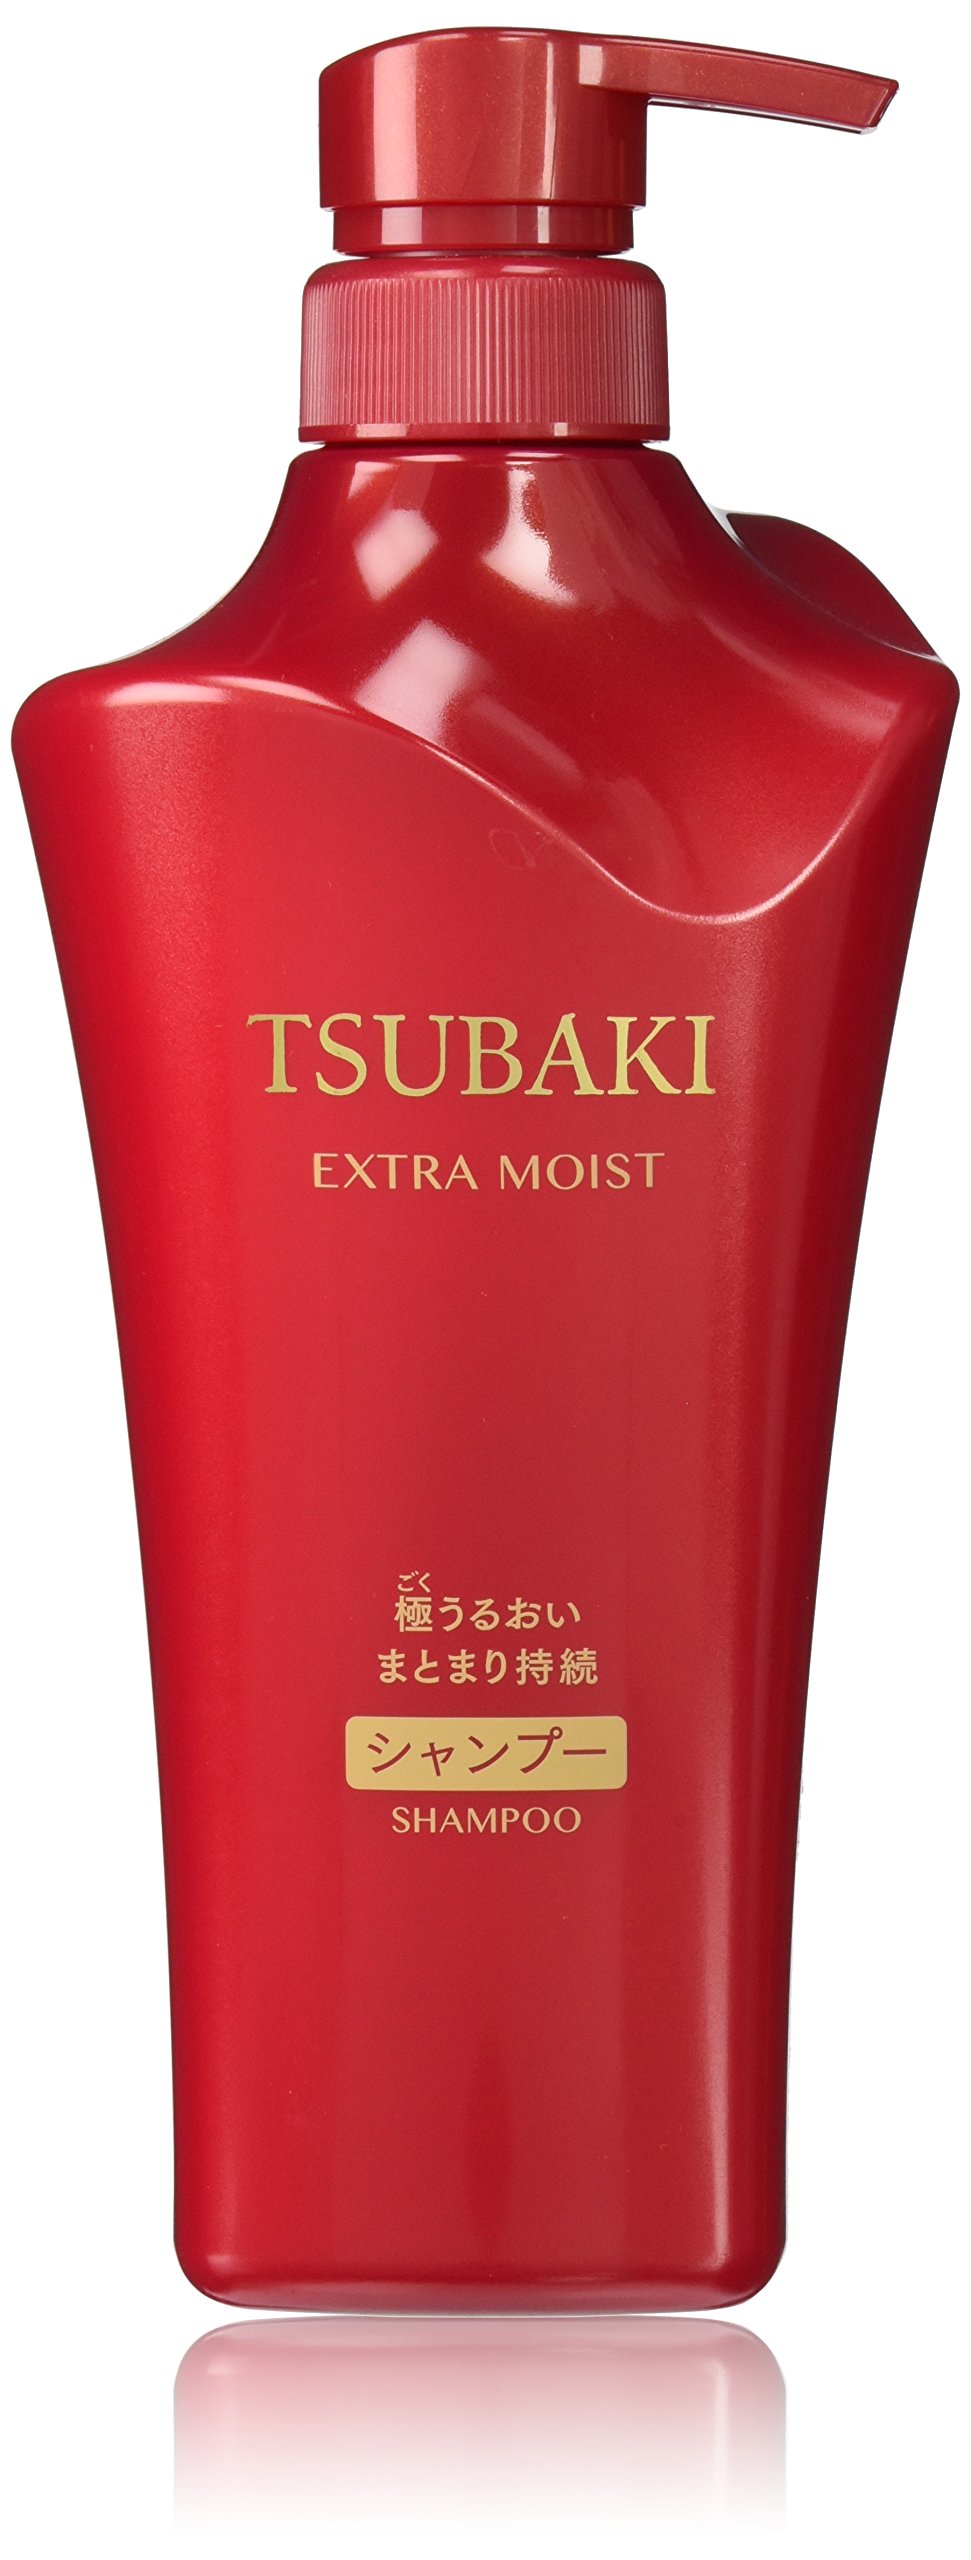 shiseido tsubaki extra moist szampon i odżywka